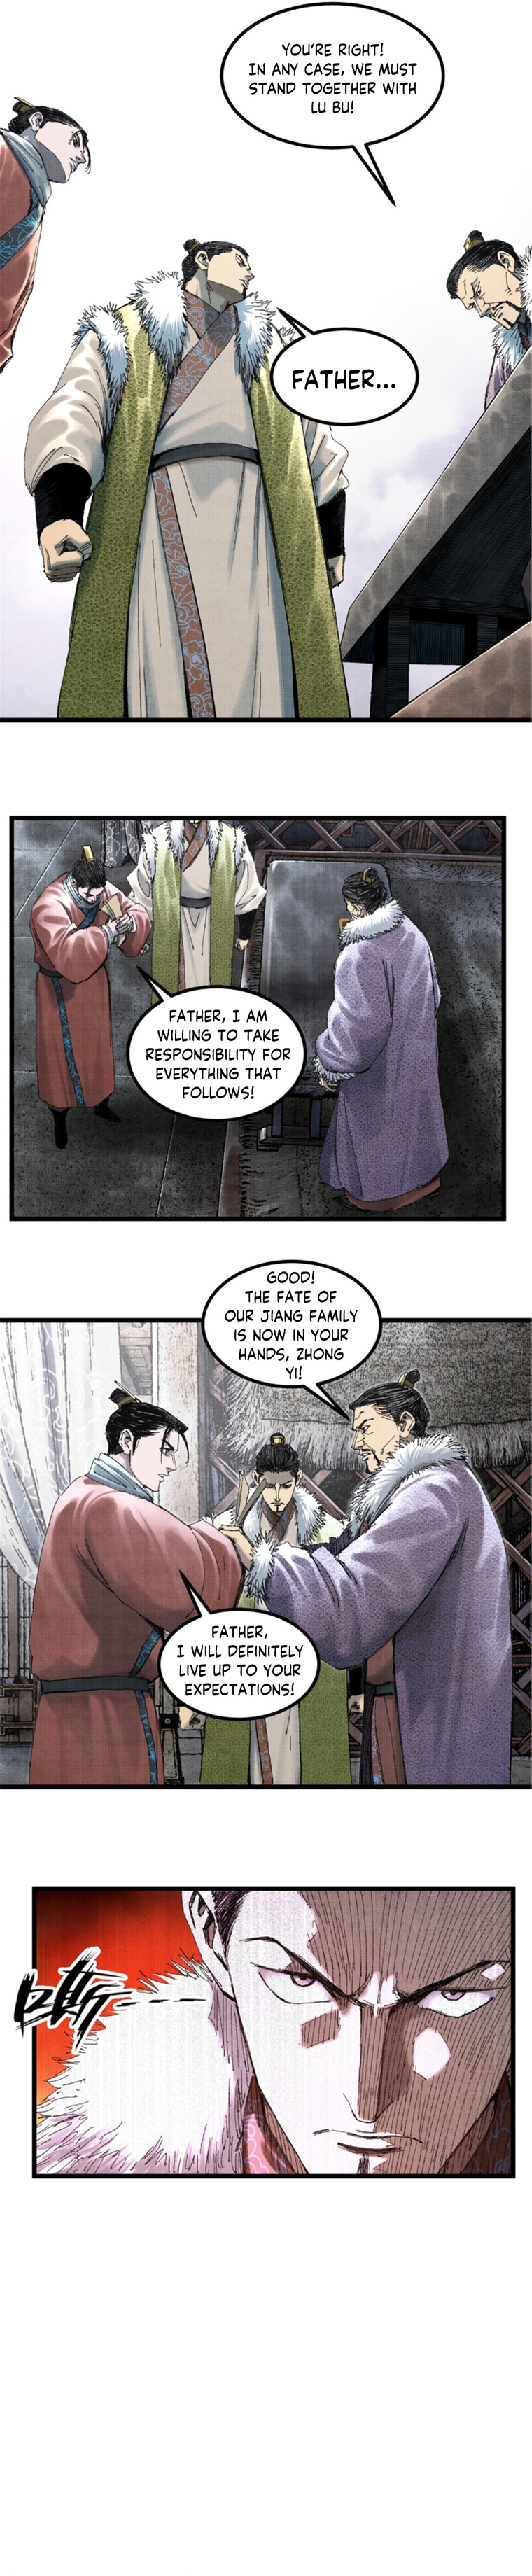 Lu Bu’s life story Chapter 77 - Page 4